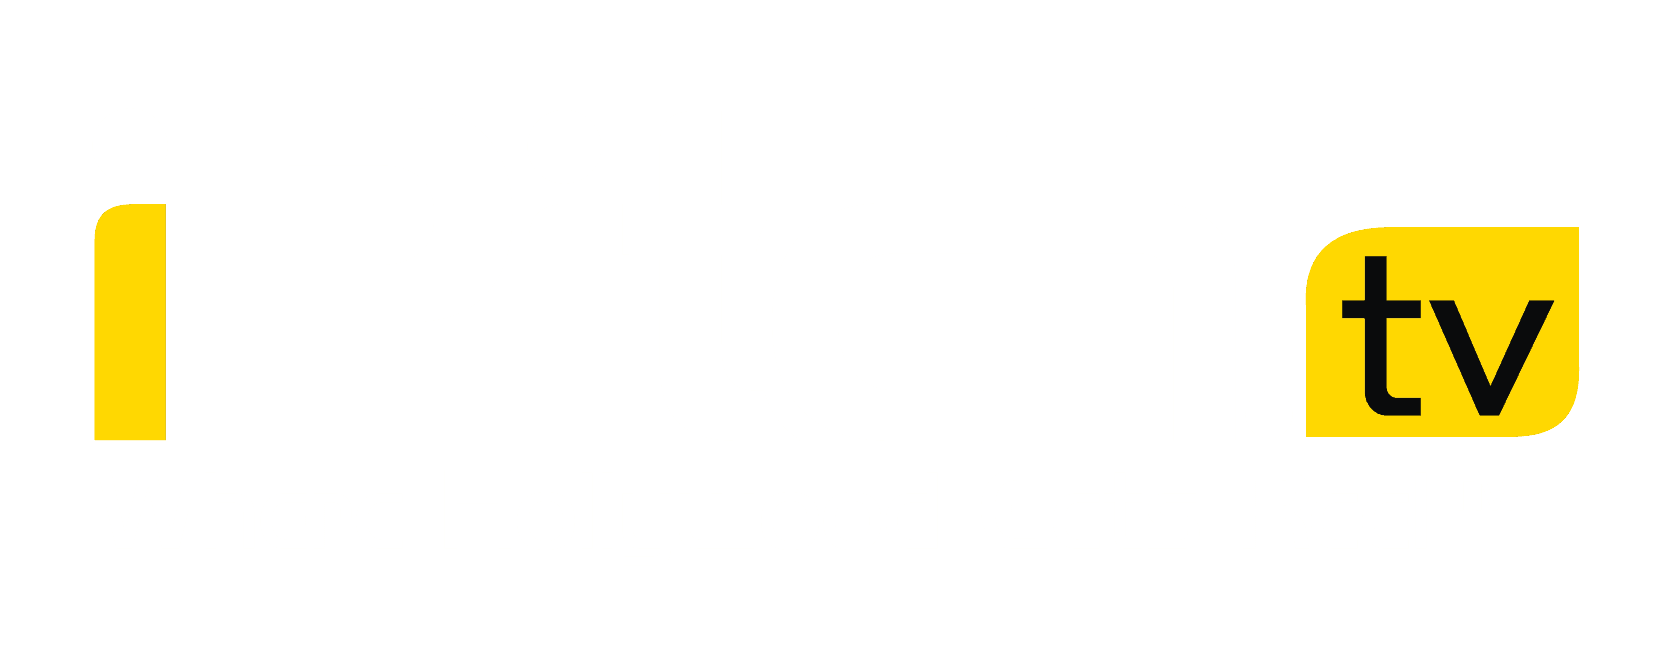 ipitch.tv logo